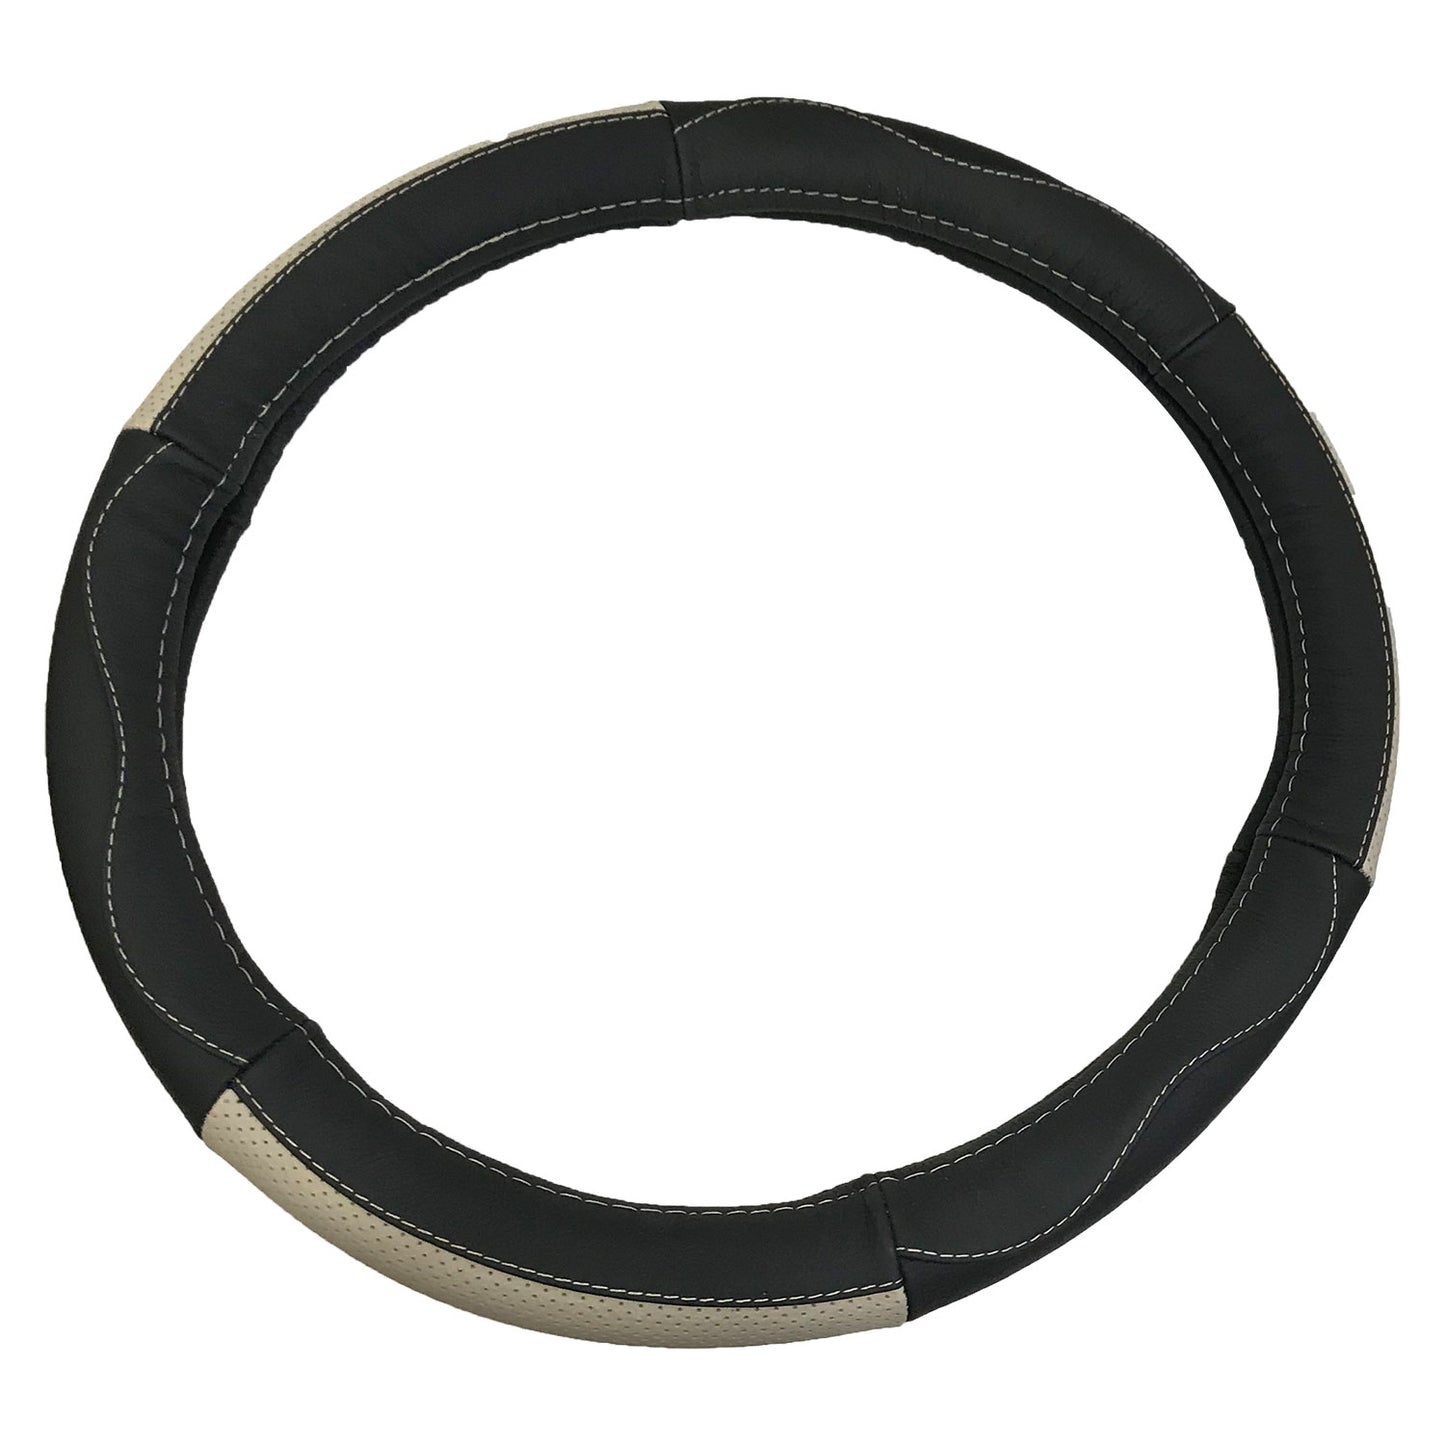 Oshotto SC-09 Fiber Leather Universal Car Steering Cover -Medium (Dark Black)